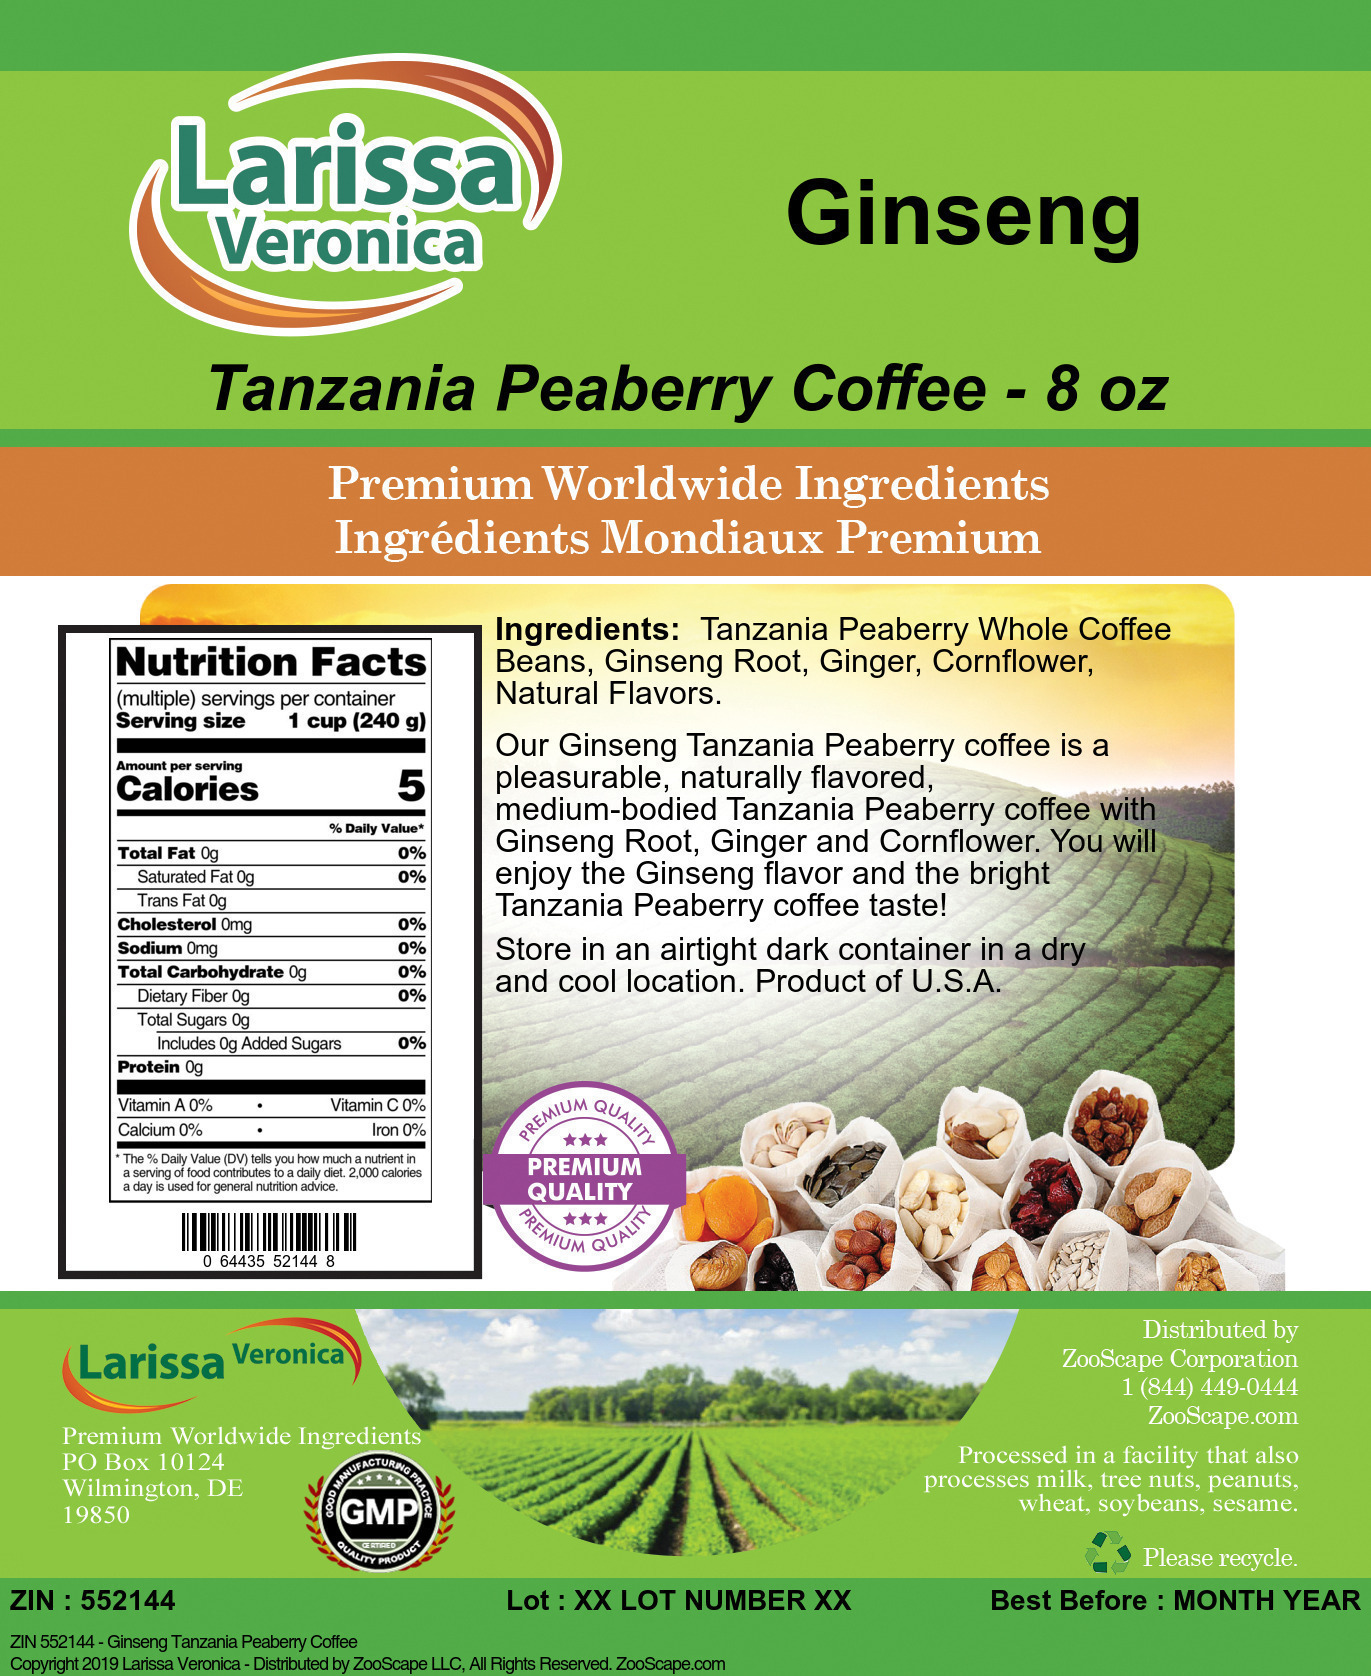 Ginseng Tanzania Peaberry Coffee - Label